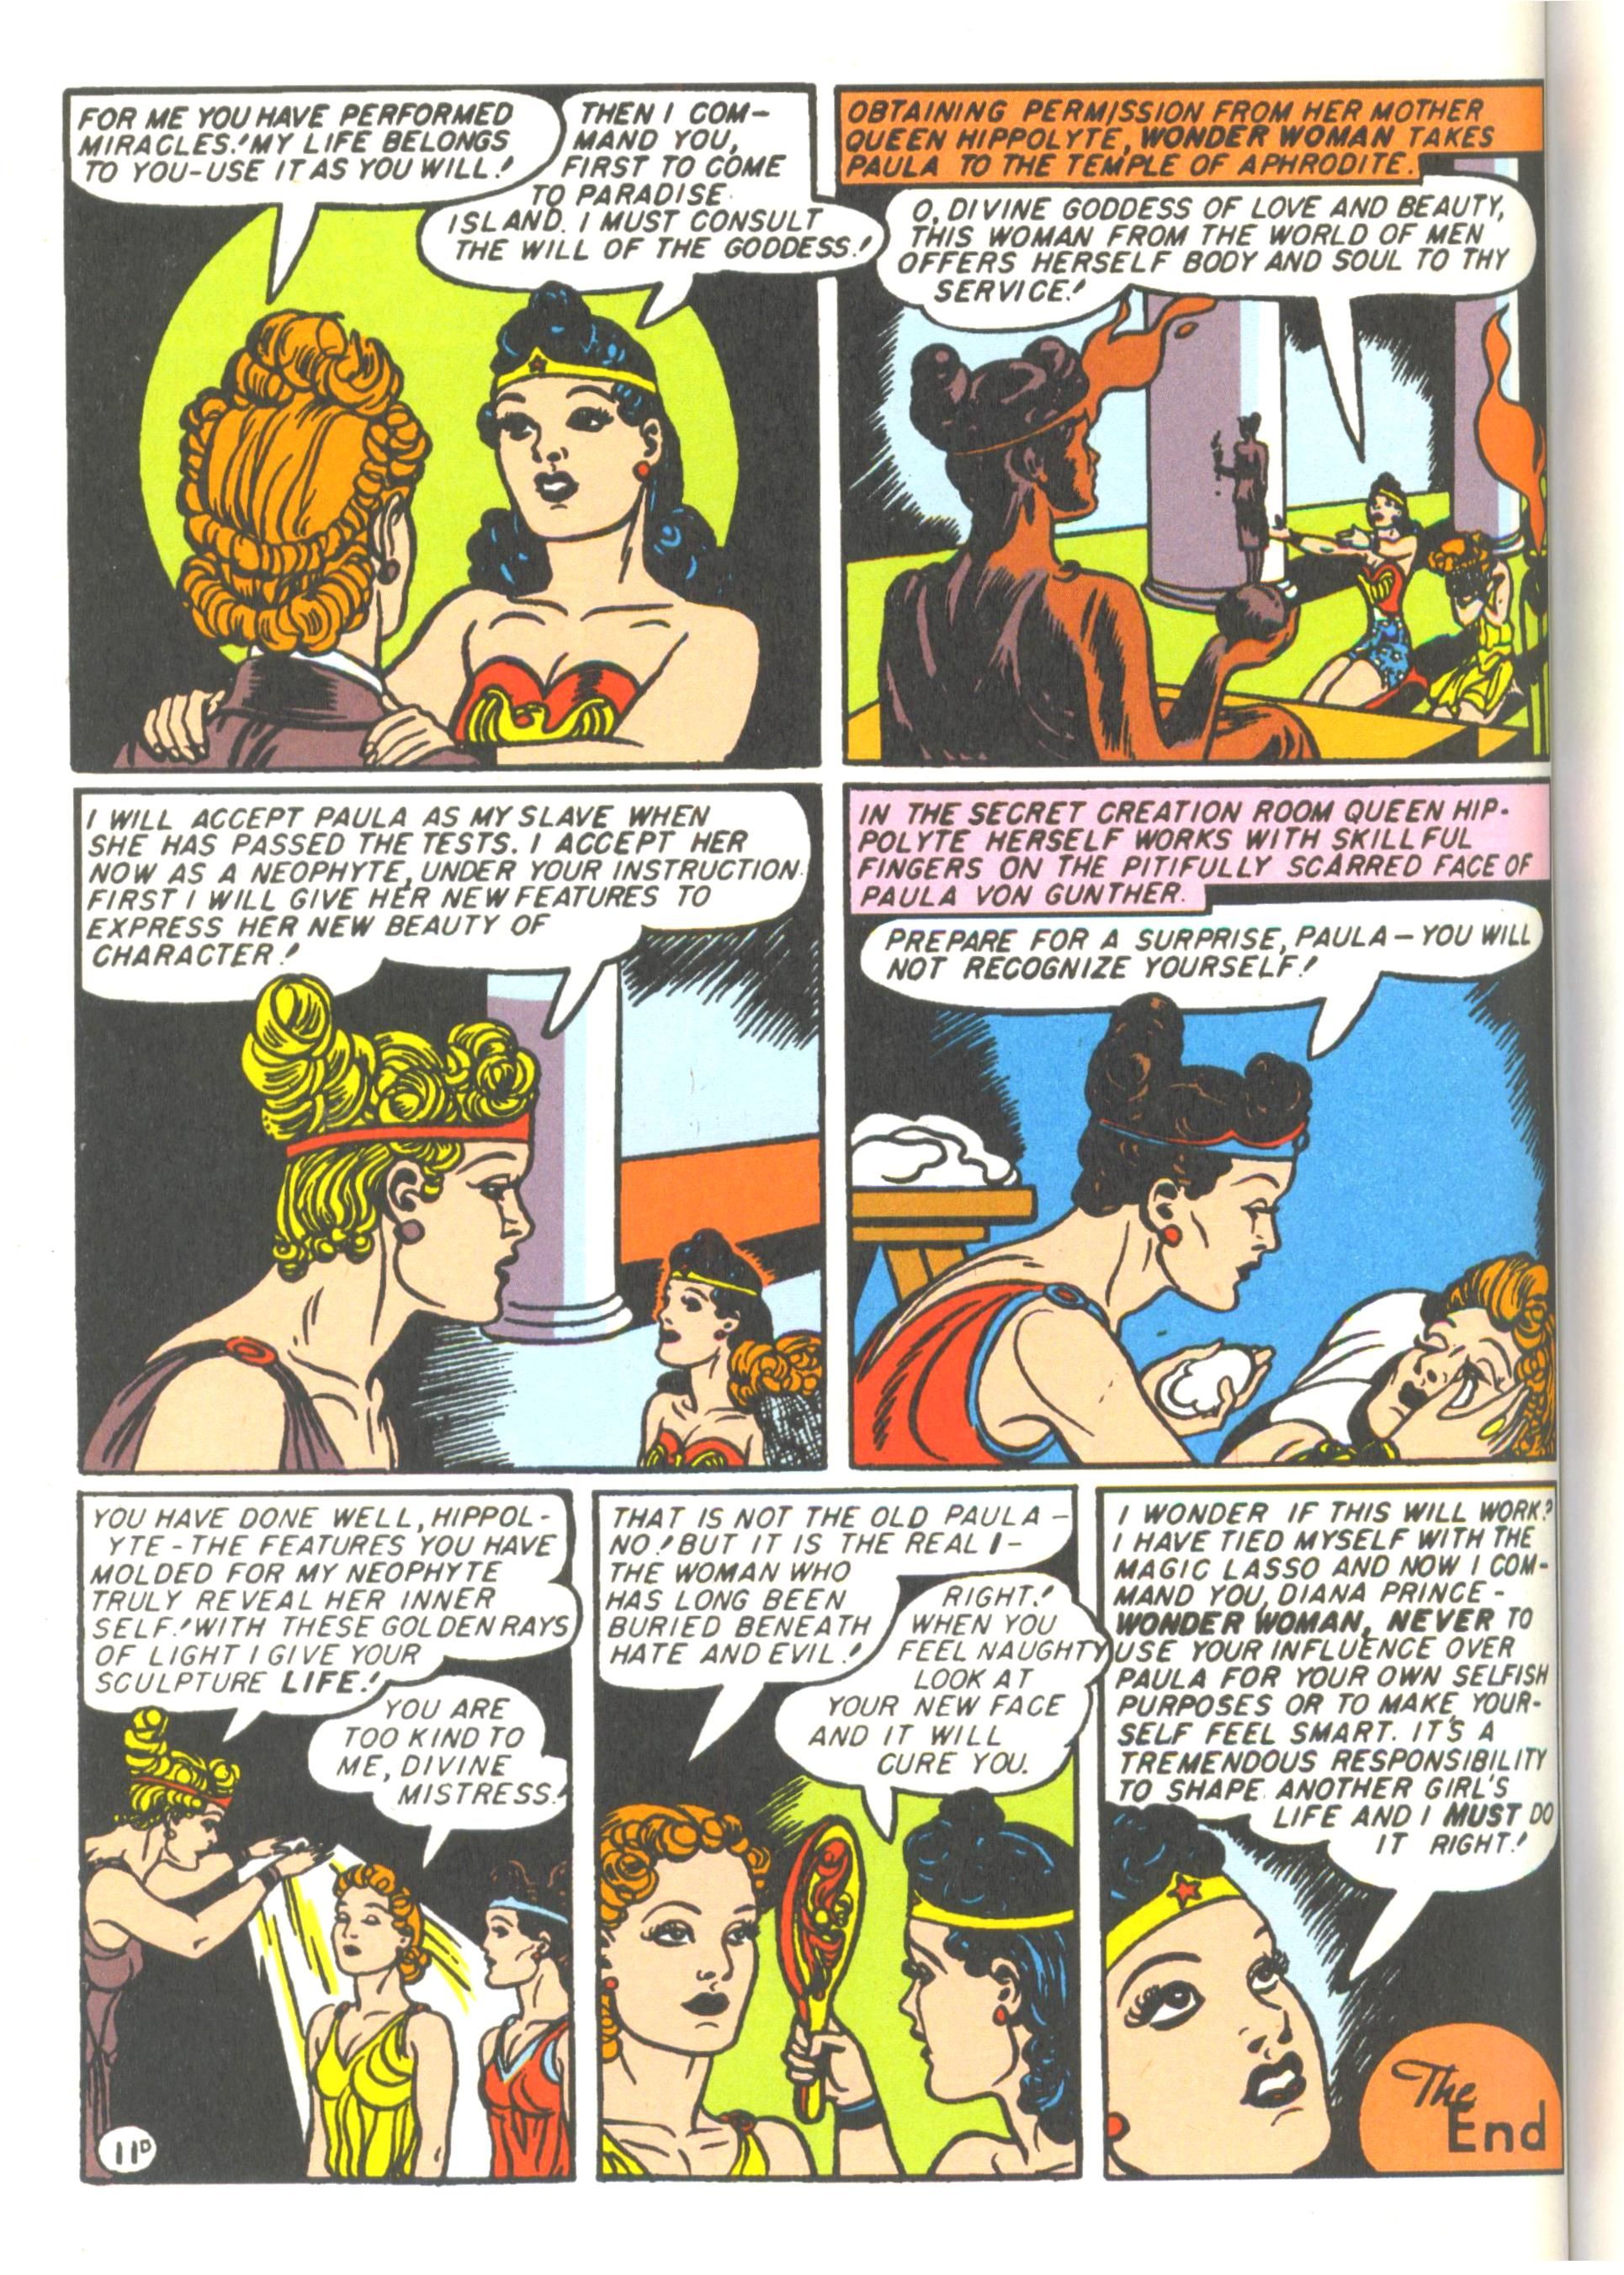 Paula von Gunther's rehabilitation, from 1943's Wonder Woman #3